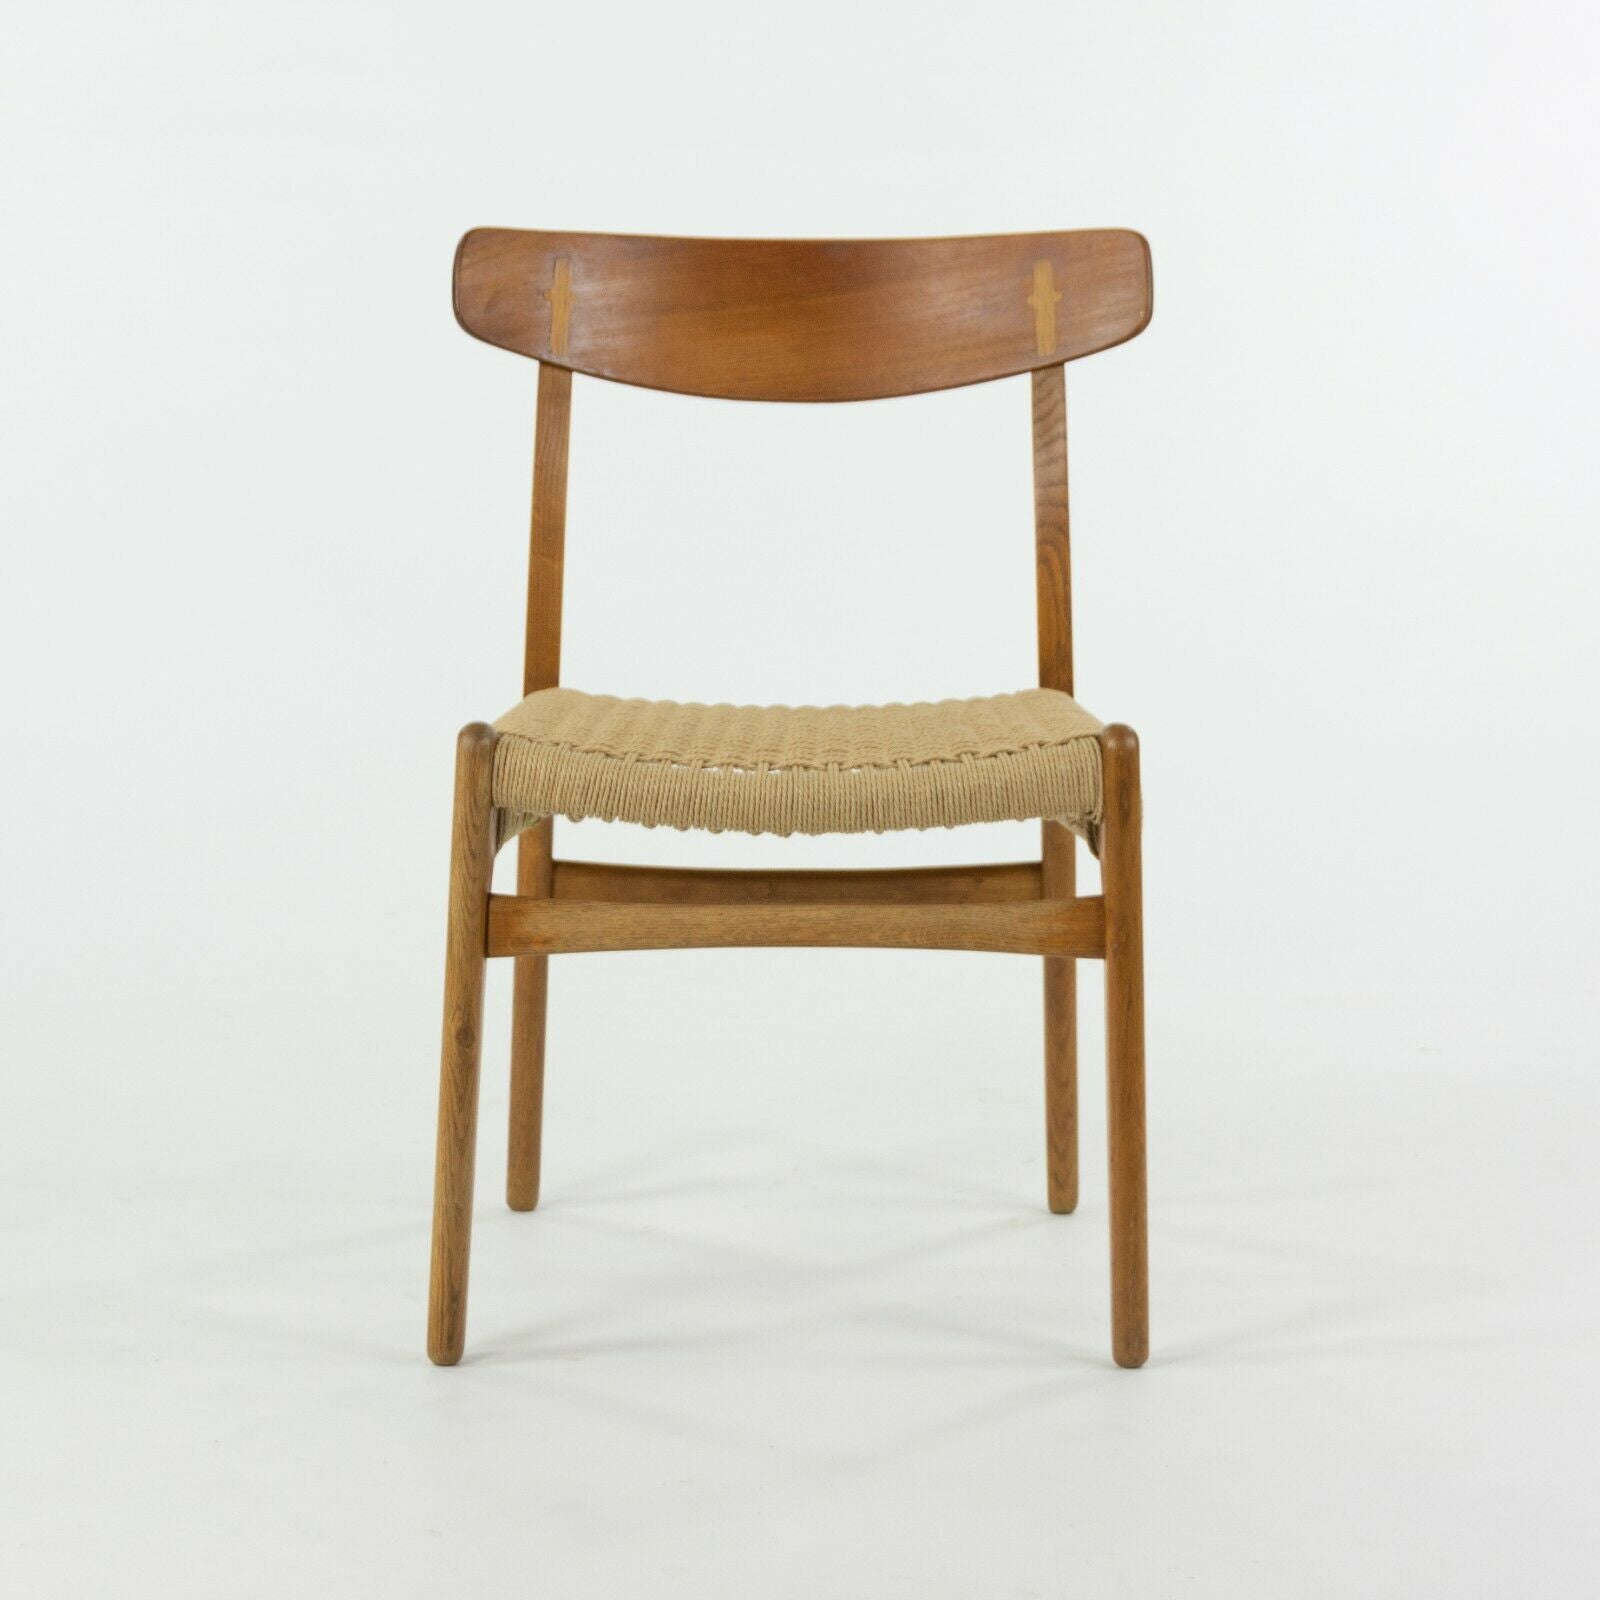 SOLD 1960s Set of 10 Vintage Hans Wegner CH23 Dining Chairs for Carl Hansen & Son Denmark